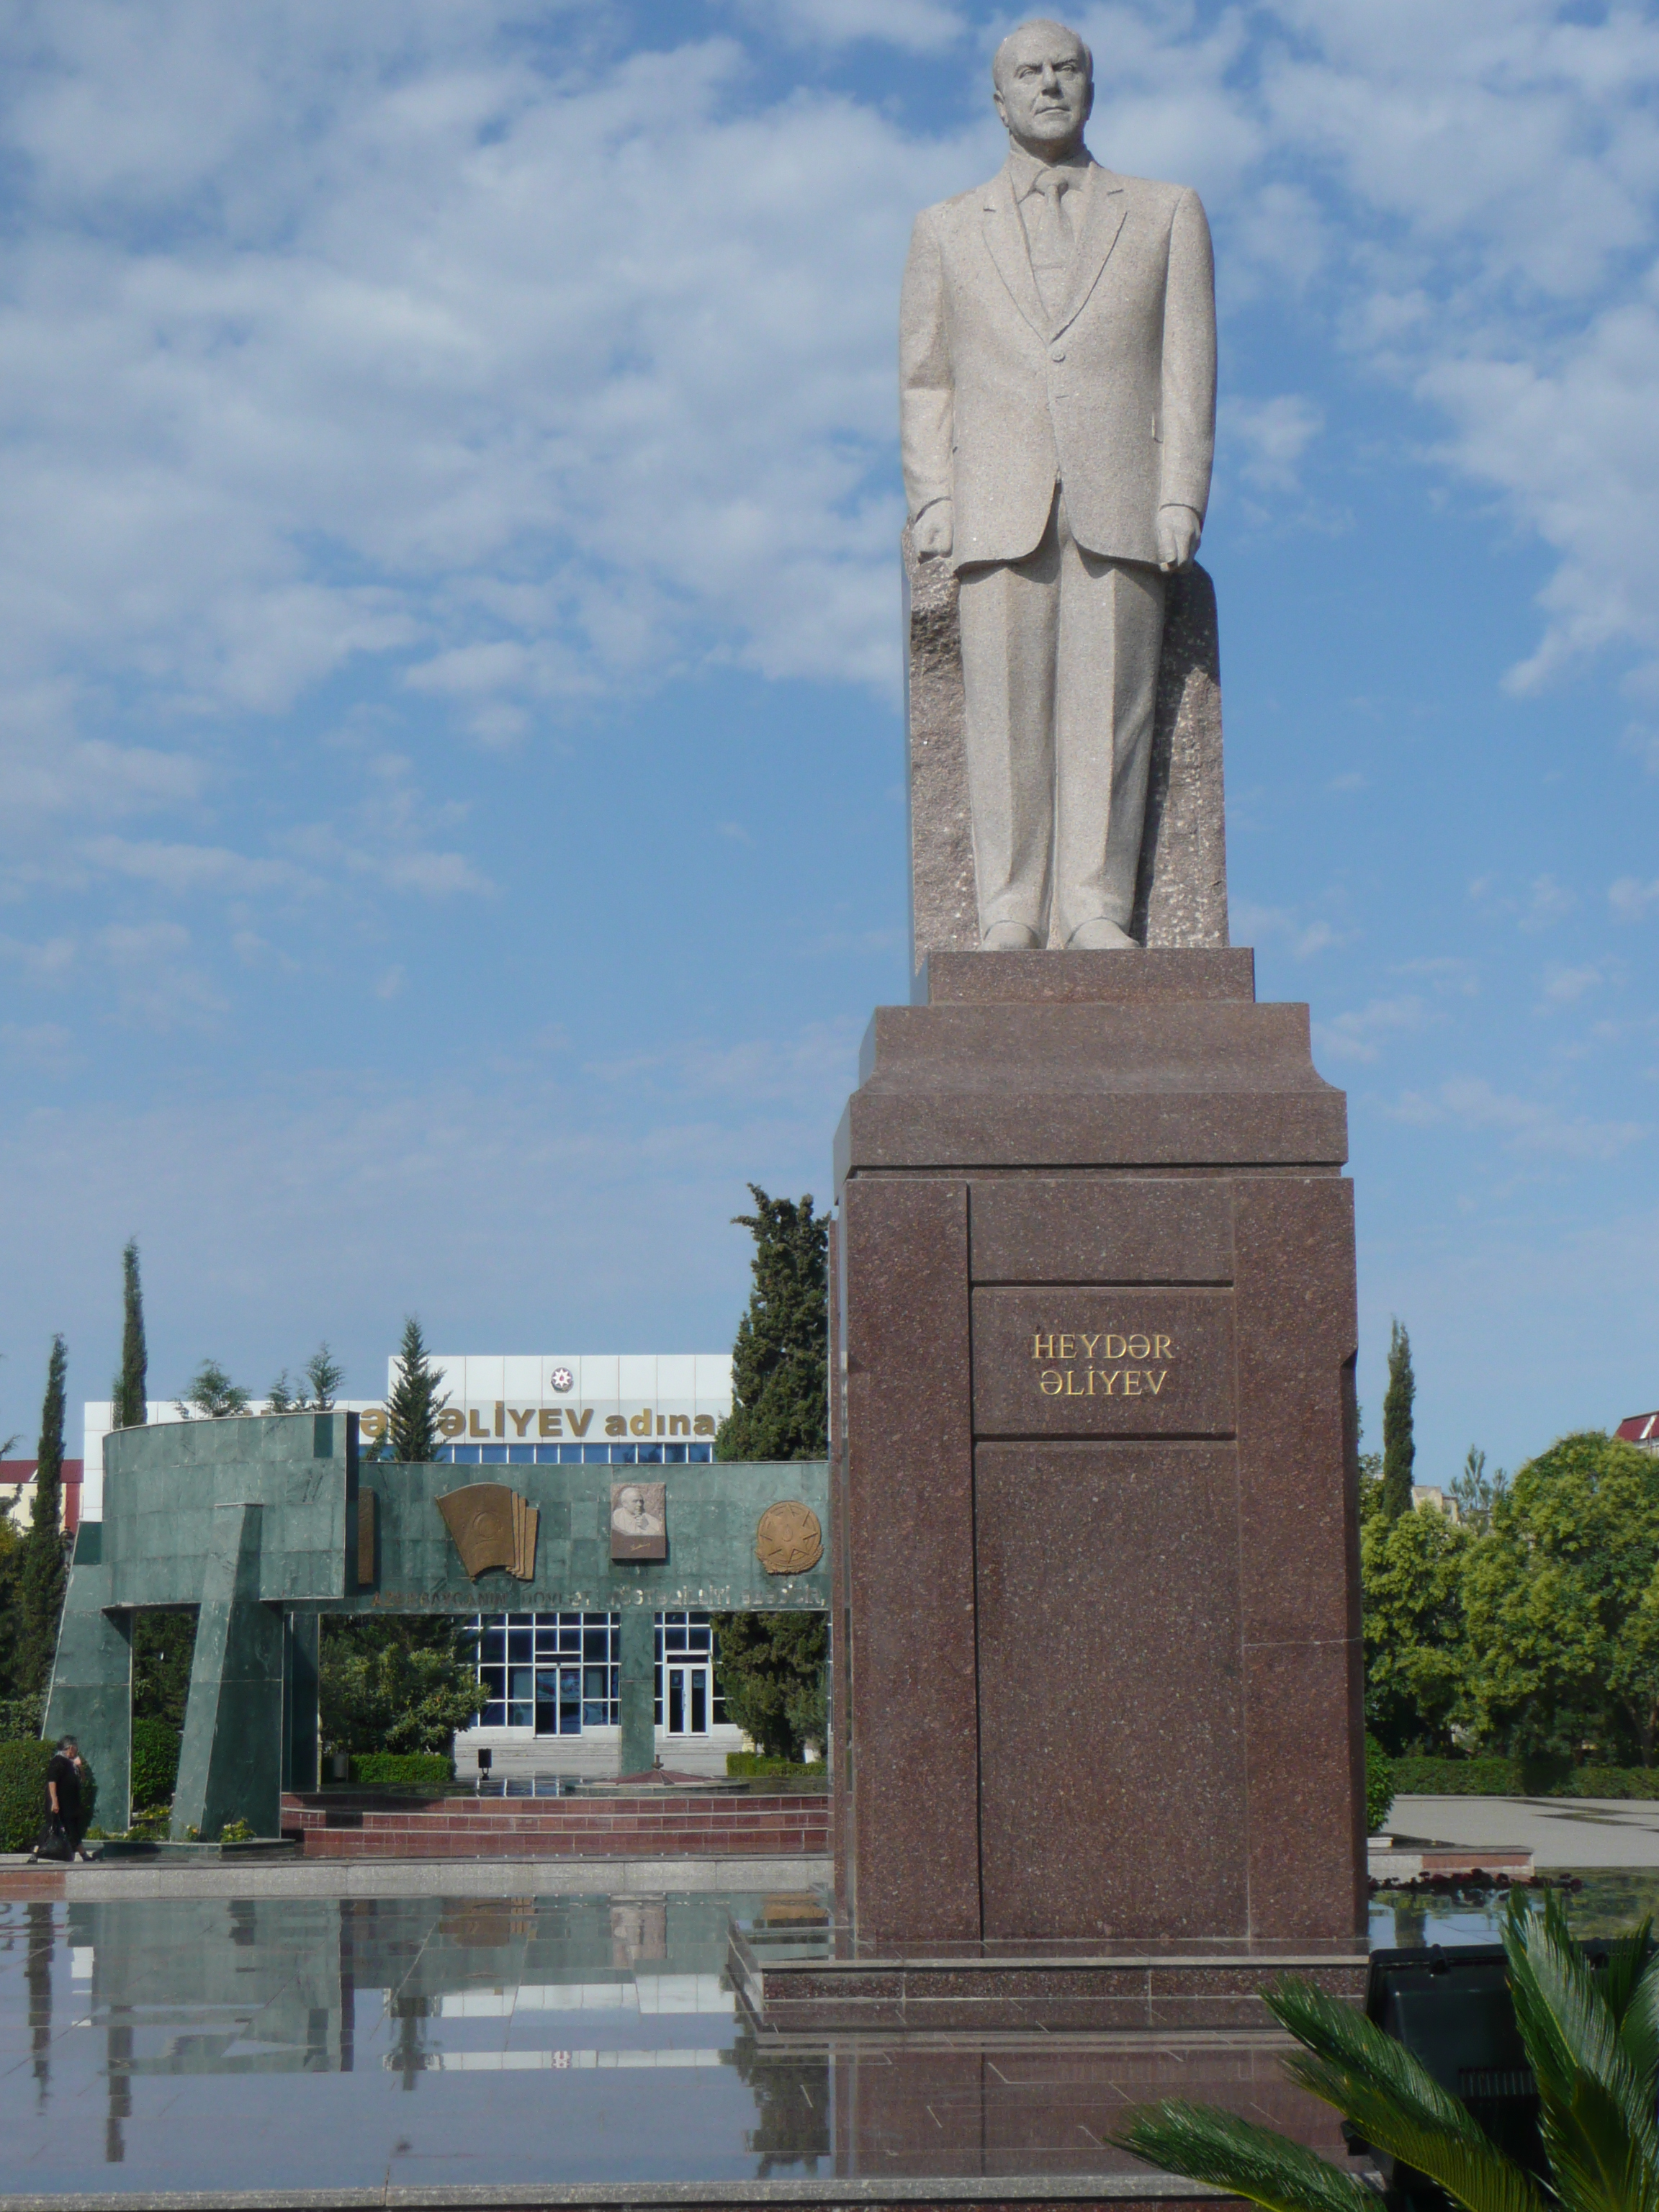 Heydar Aliyev statue in Heydar Aliyev park on Heydar Aliyev St with Heydar Aliyev building behind (yes really)